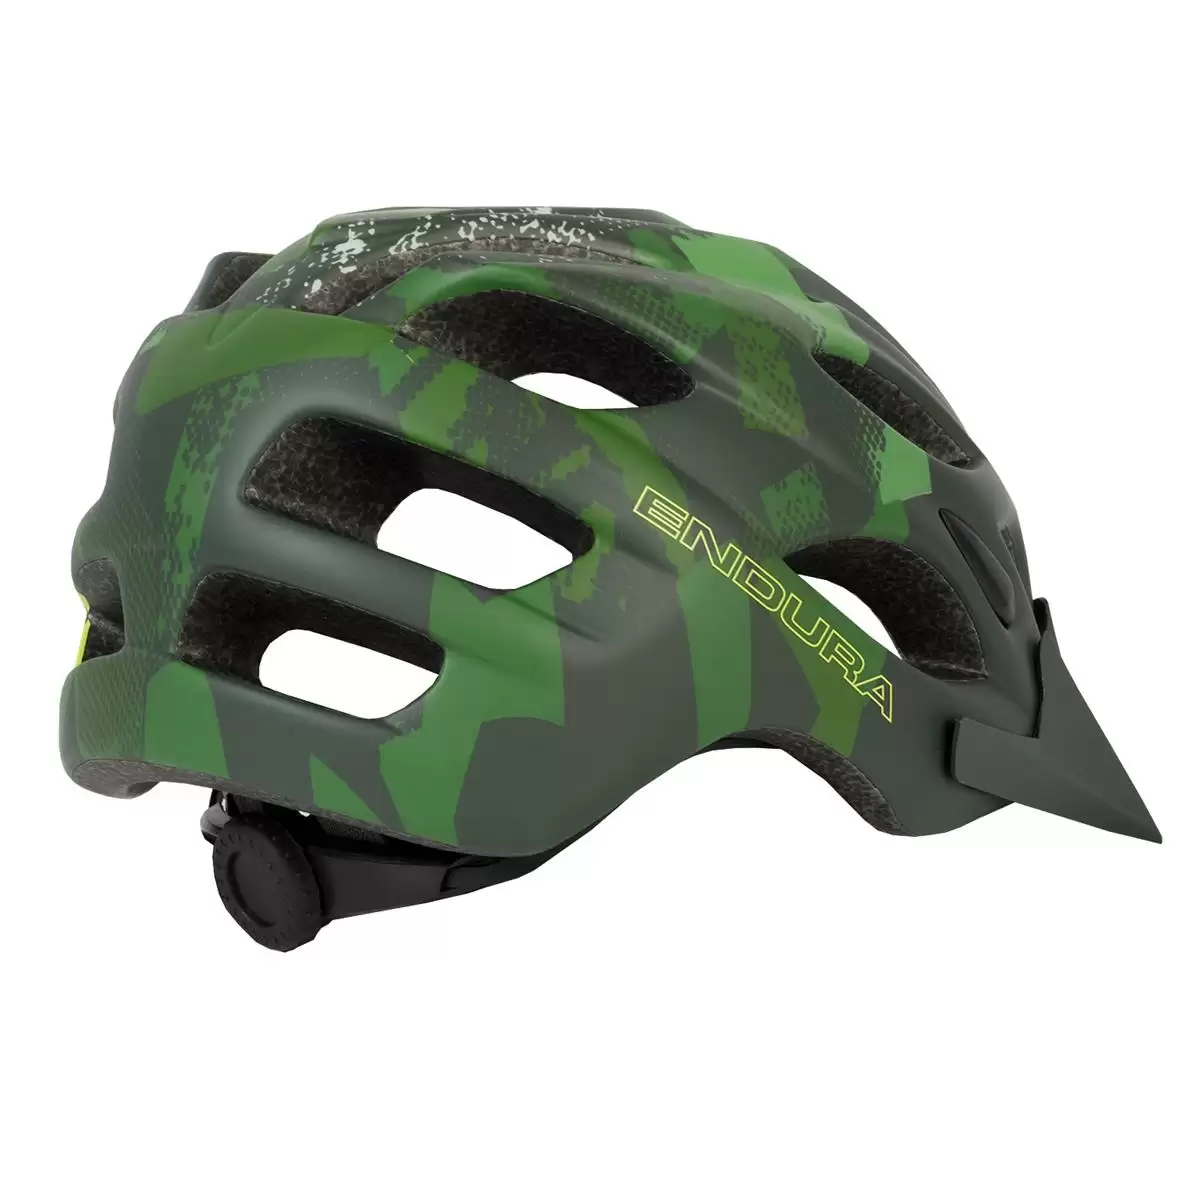 Hummvee helmet Khaki Green size M/L (55-59cm) #1